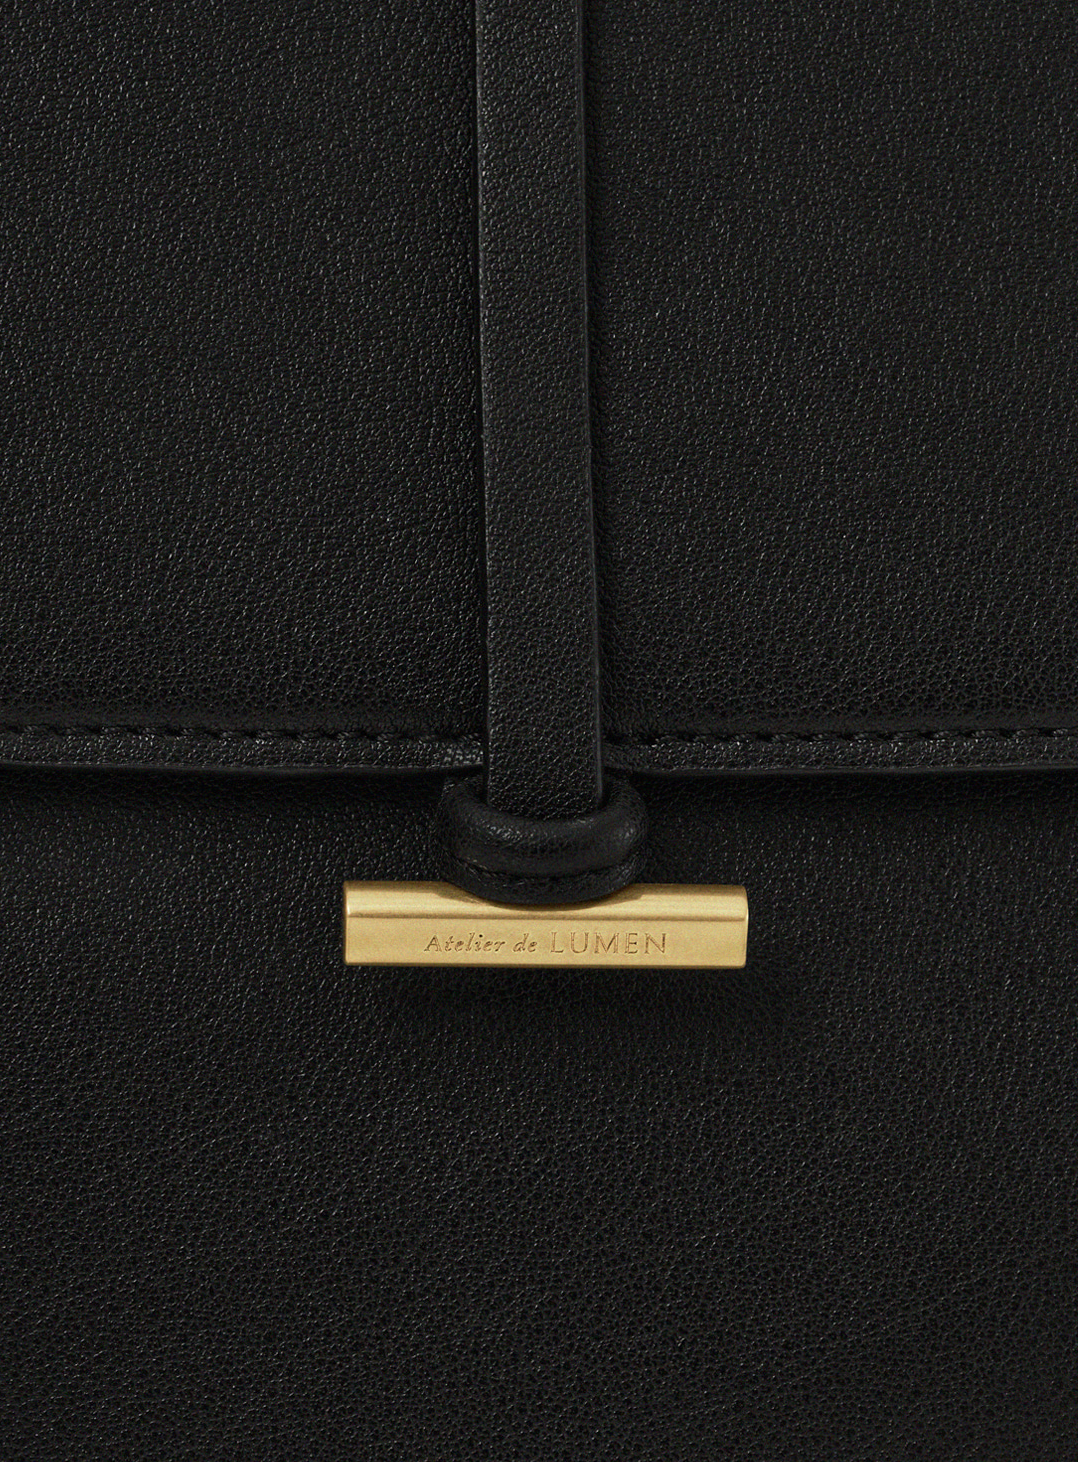 Marron Backpack In Soft Black